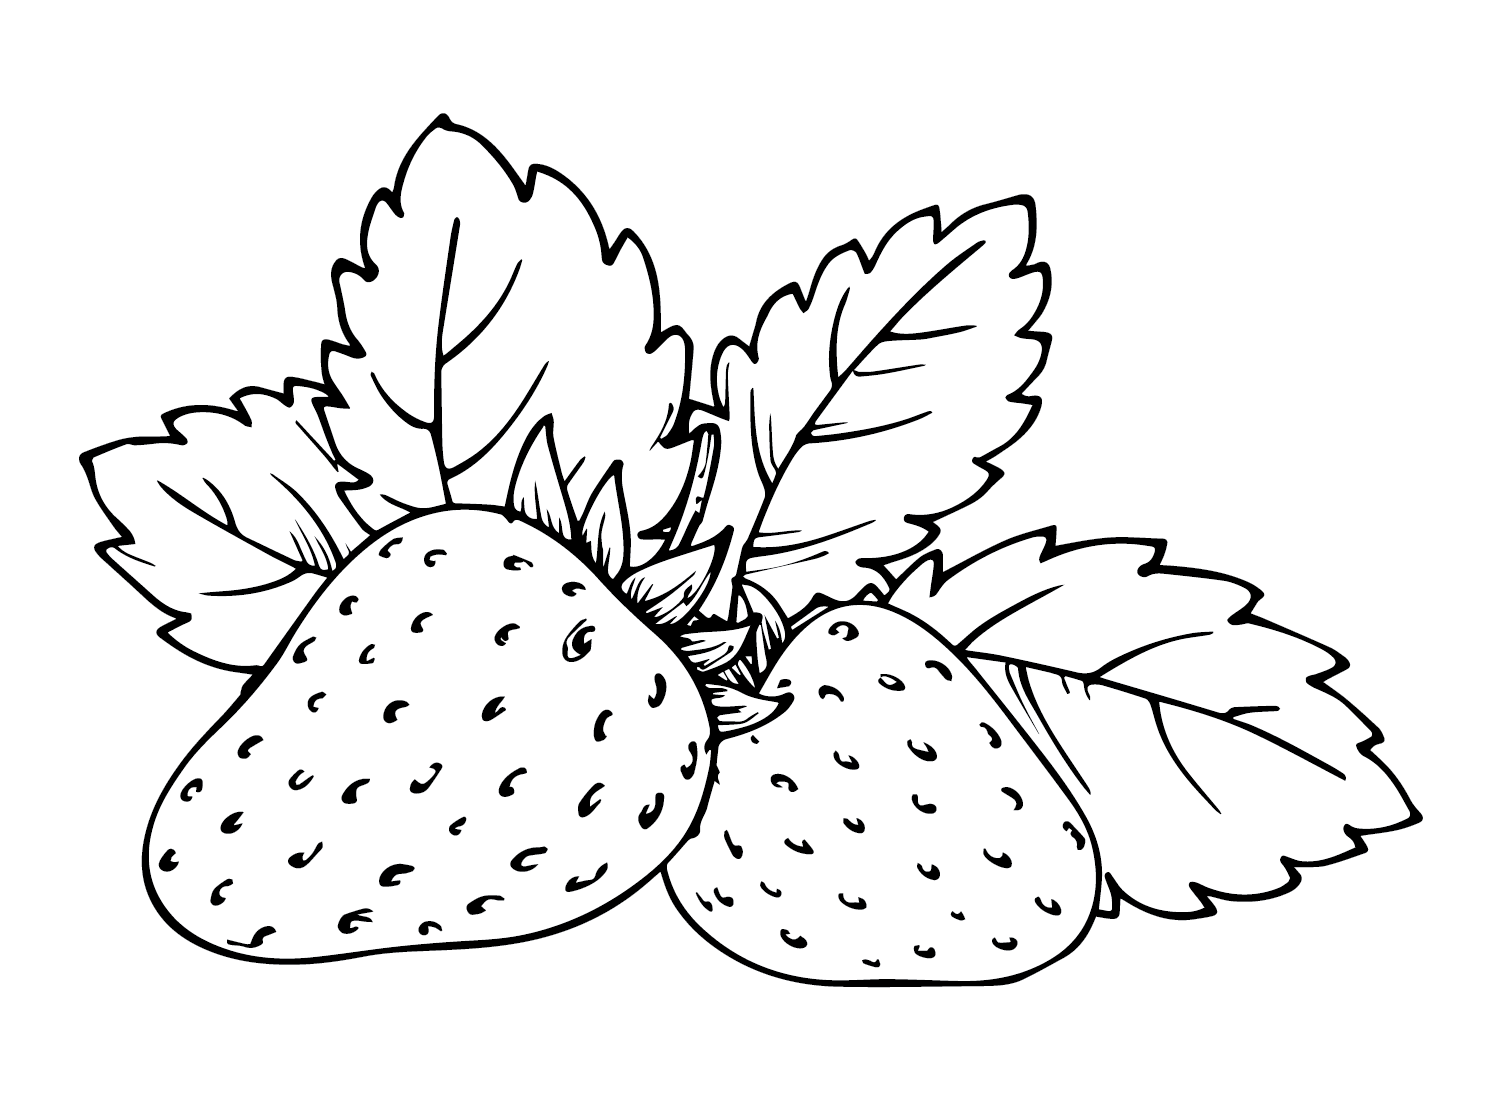 Erdbeerfrei von Erdbeere